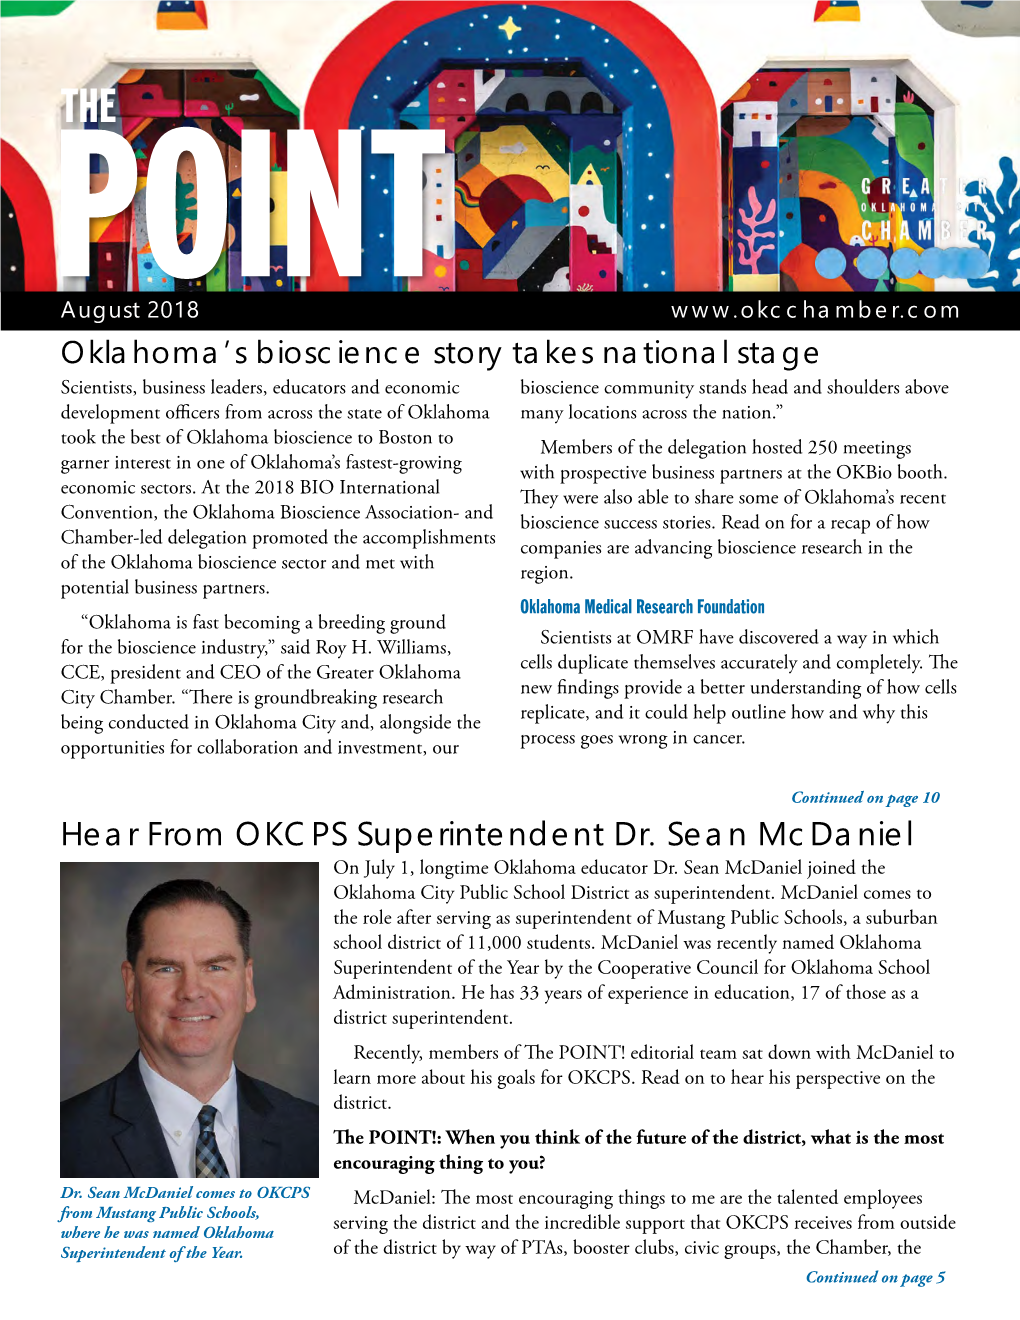 Hear from OKCPS Superintendent Dr. Sean Mcdaniel on July 1, Longtime Oklahoma Educator Dr